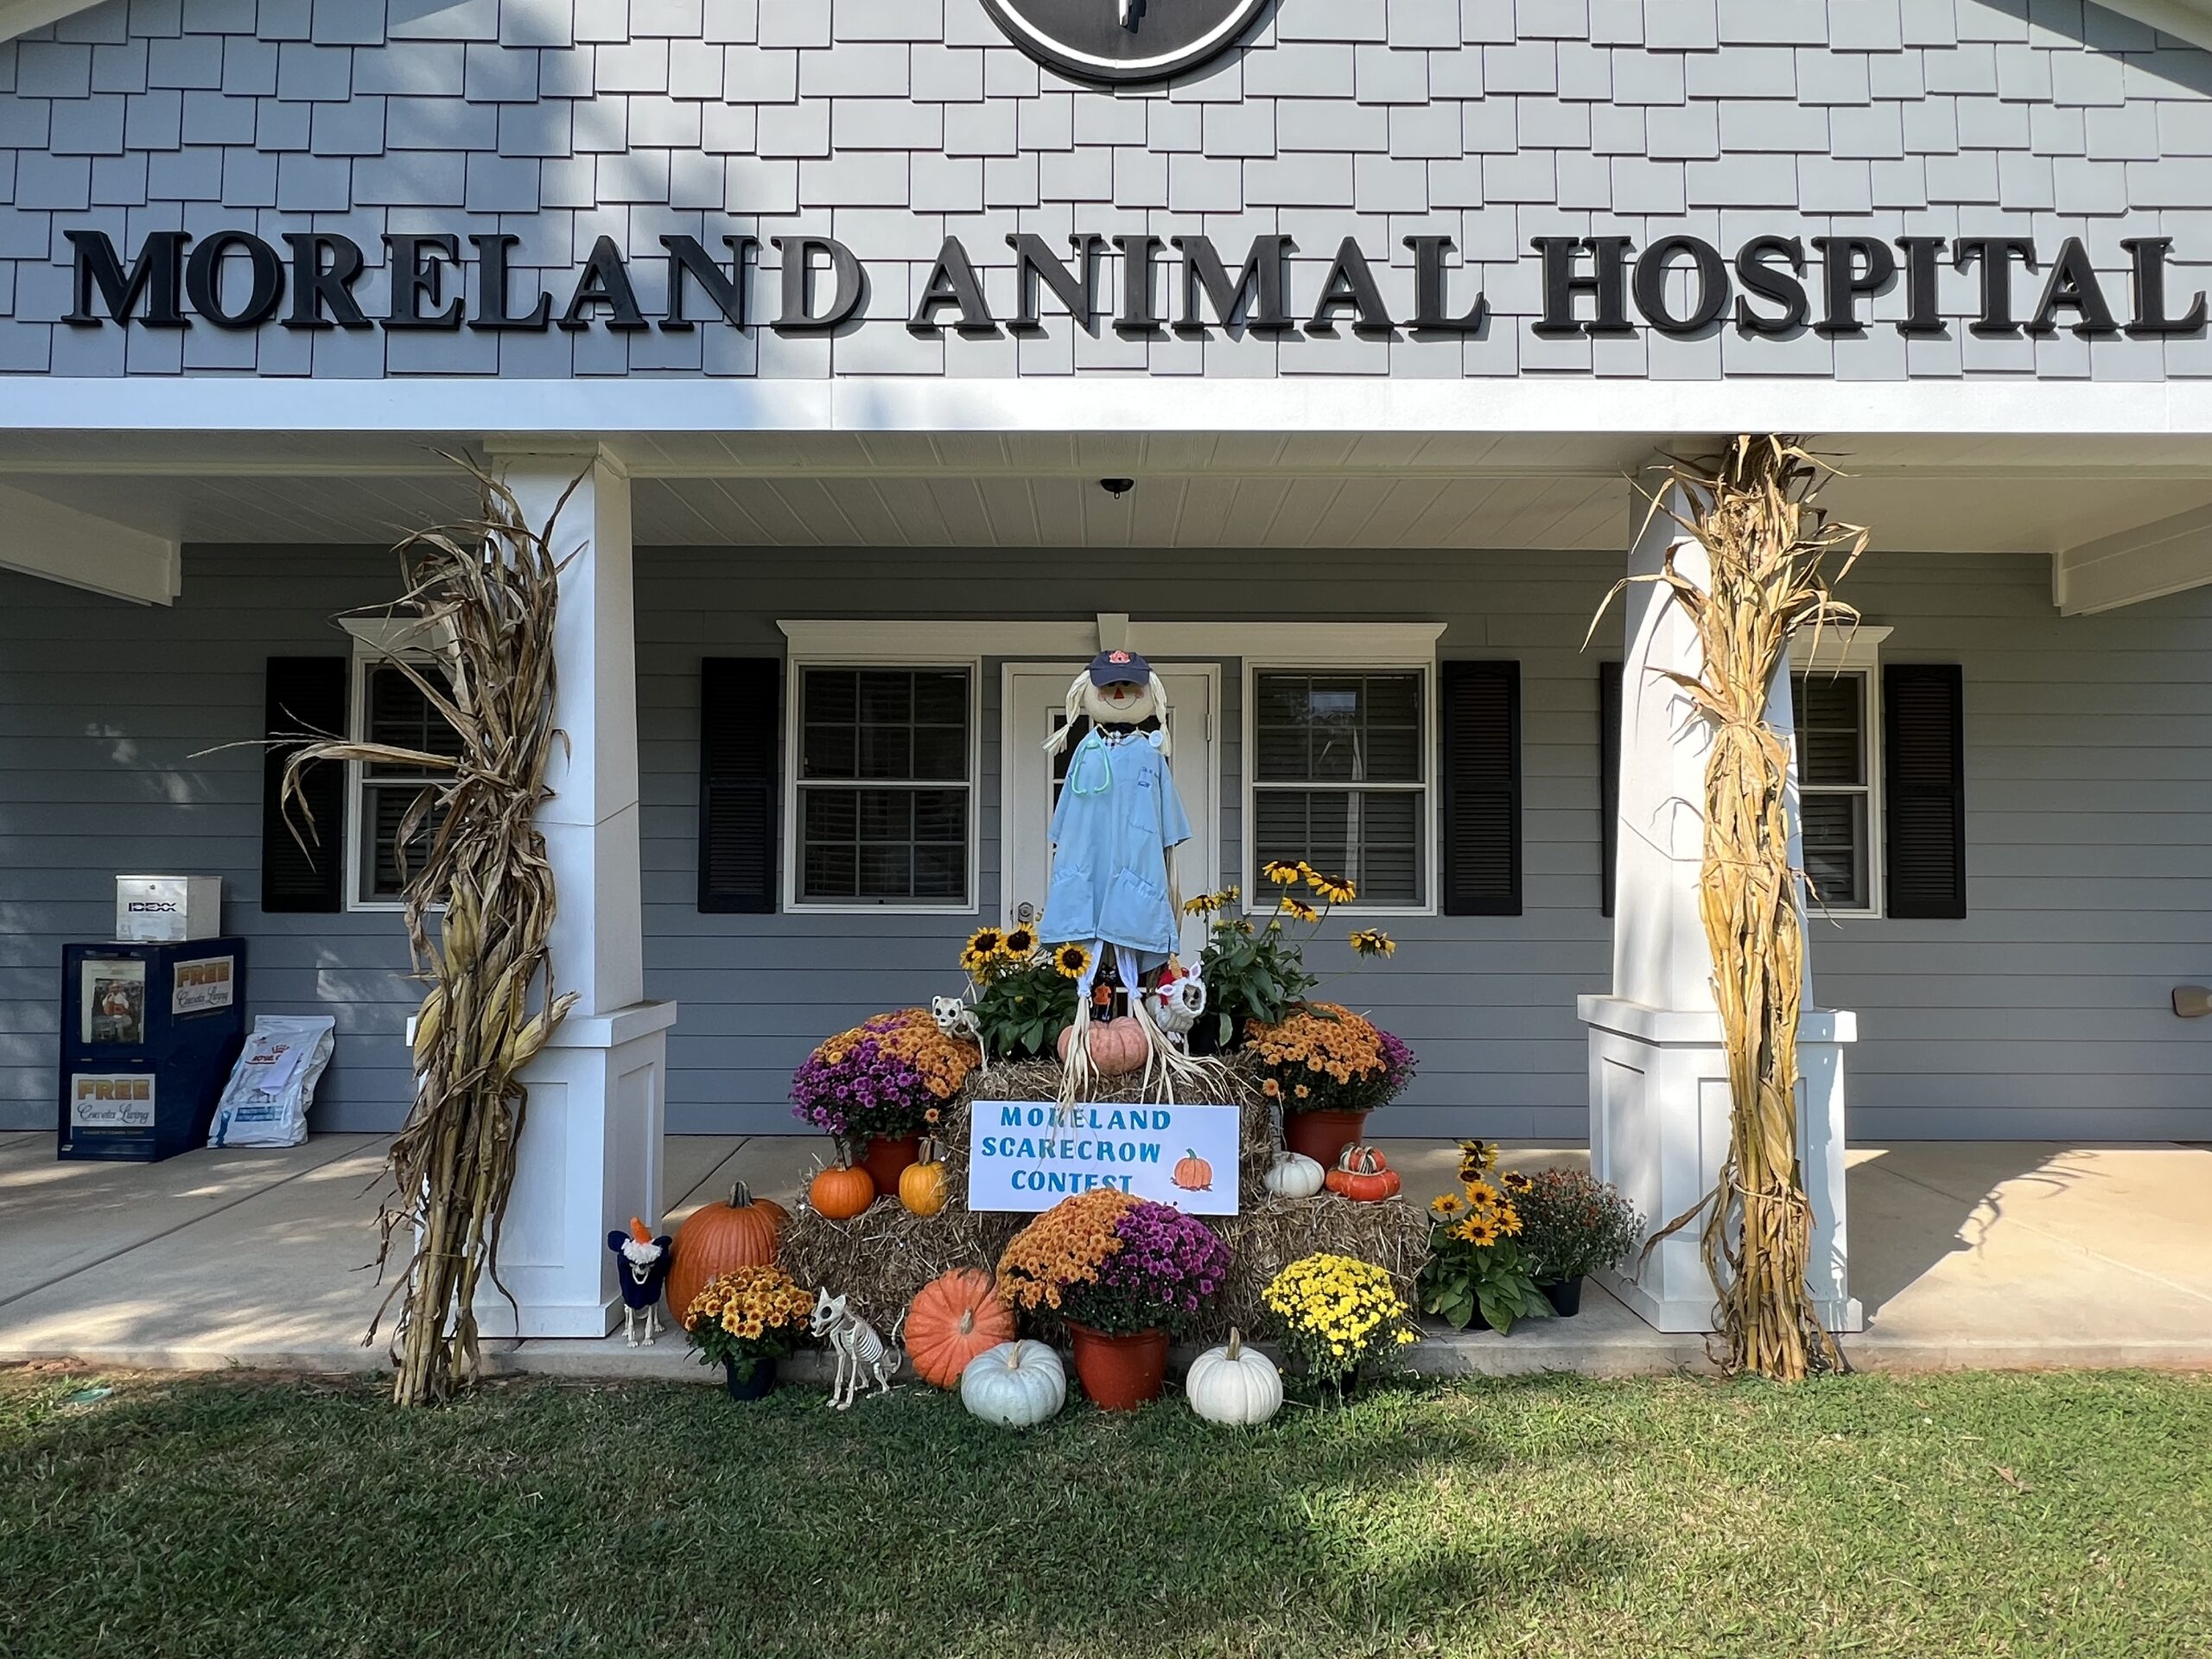 Moreland Animal Hospital Scarecrow